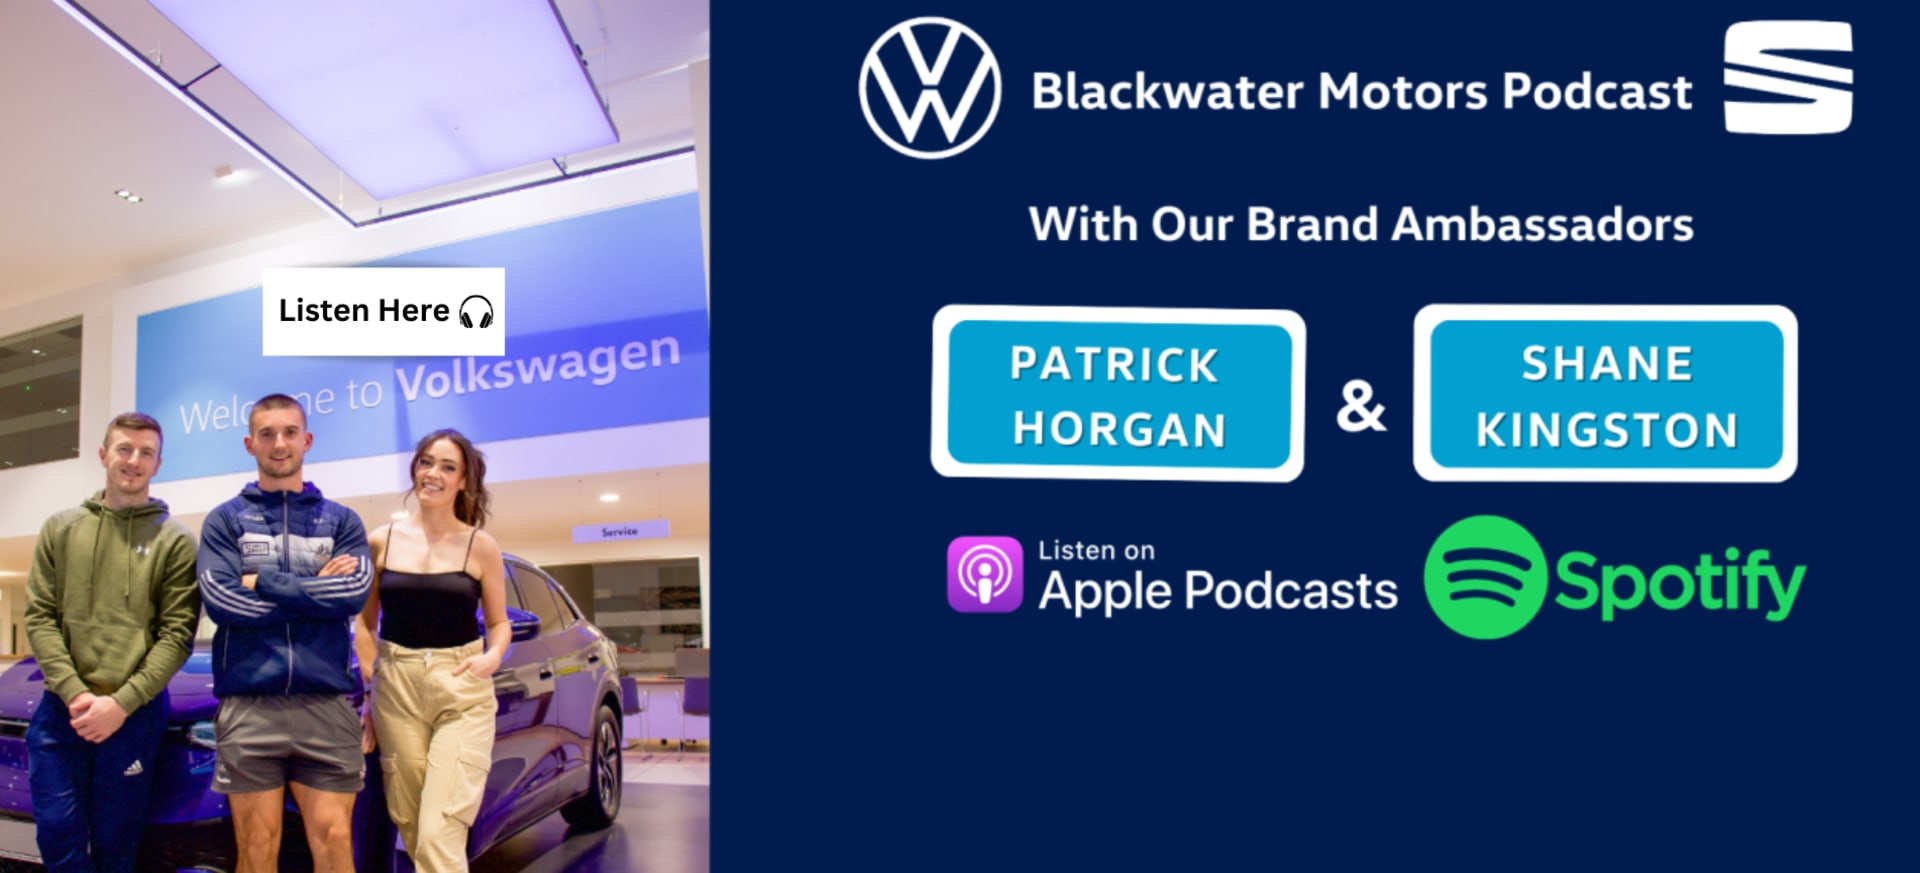 The Blackwater Motors Podcast 